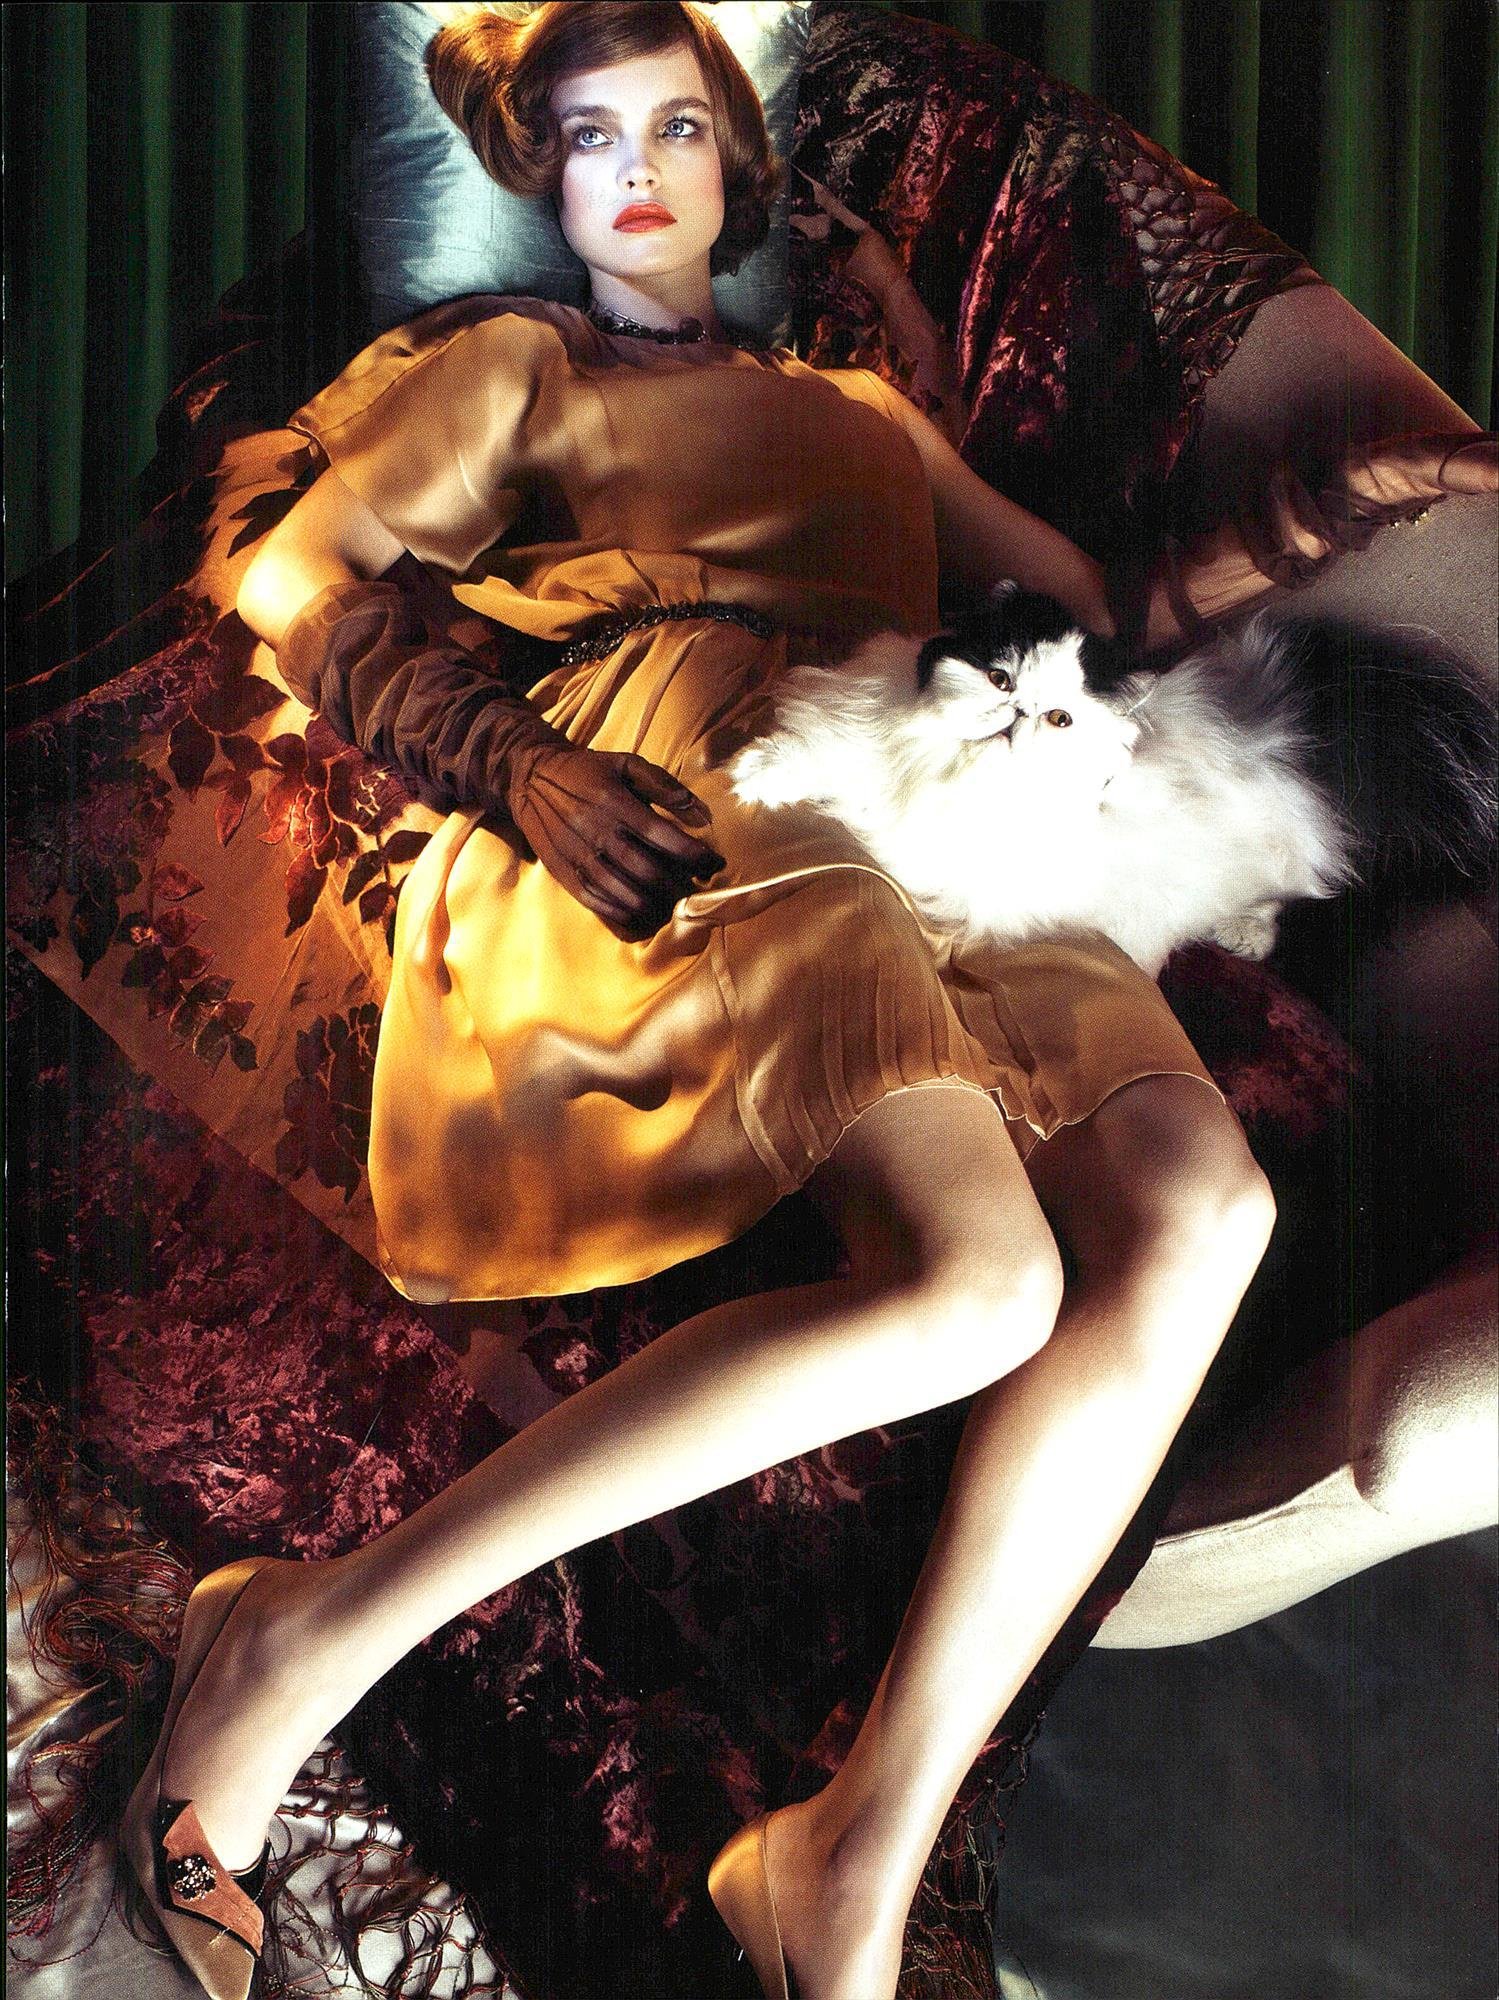 Natalia-Vodianova-by-Steven-Meisel-Vogue-Italia-Dinner-at-8-May-2008-9.jpeg